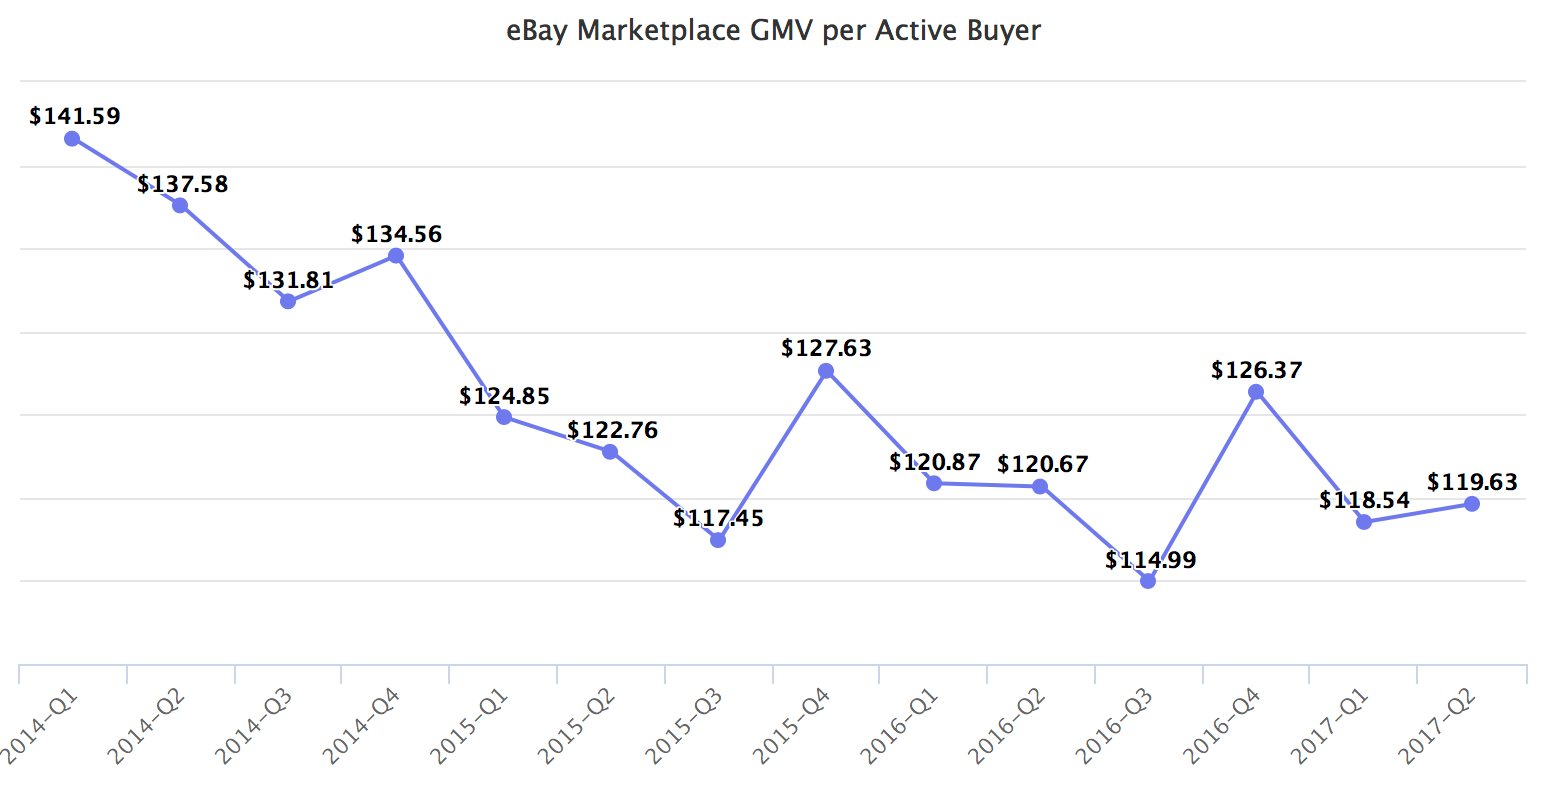 eBay Marketplace GMV per Active Buyer